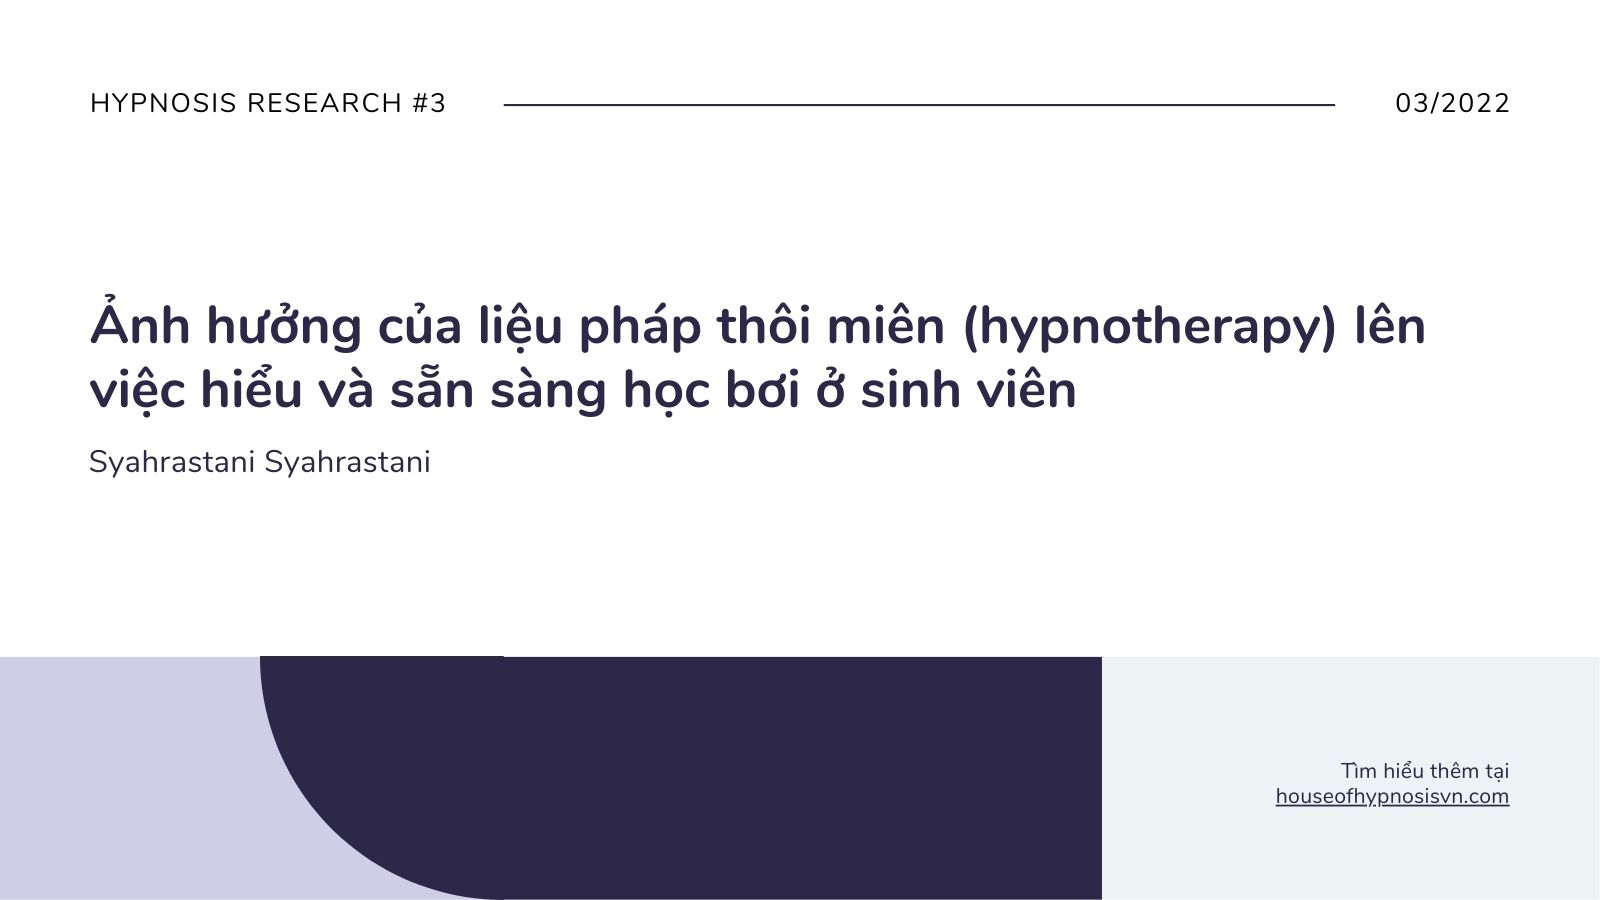 house-of-hypnosis-vietnam-thoi-mien-tri-lieu-research-3